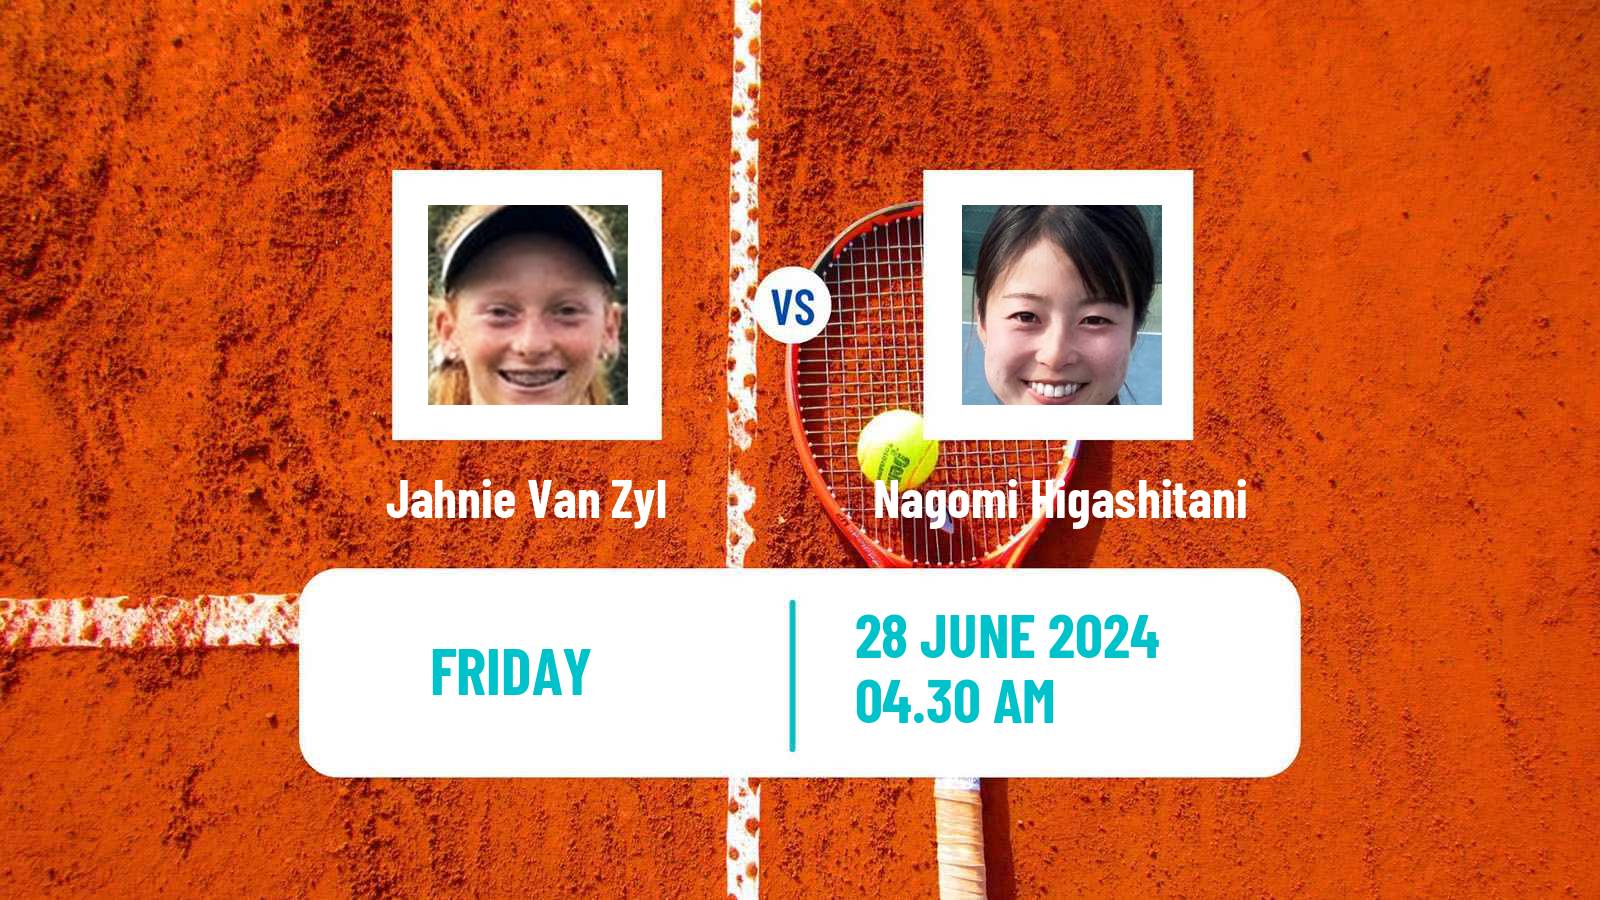 Tennis ITF W15 Hillcrest 2 Women Jahnie Van Zyl - Nagomi Higashitani